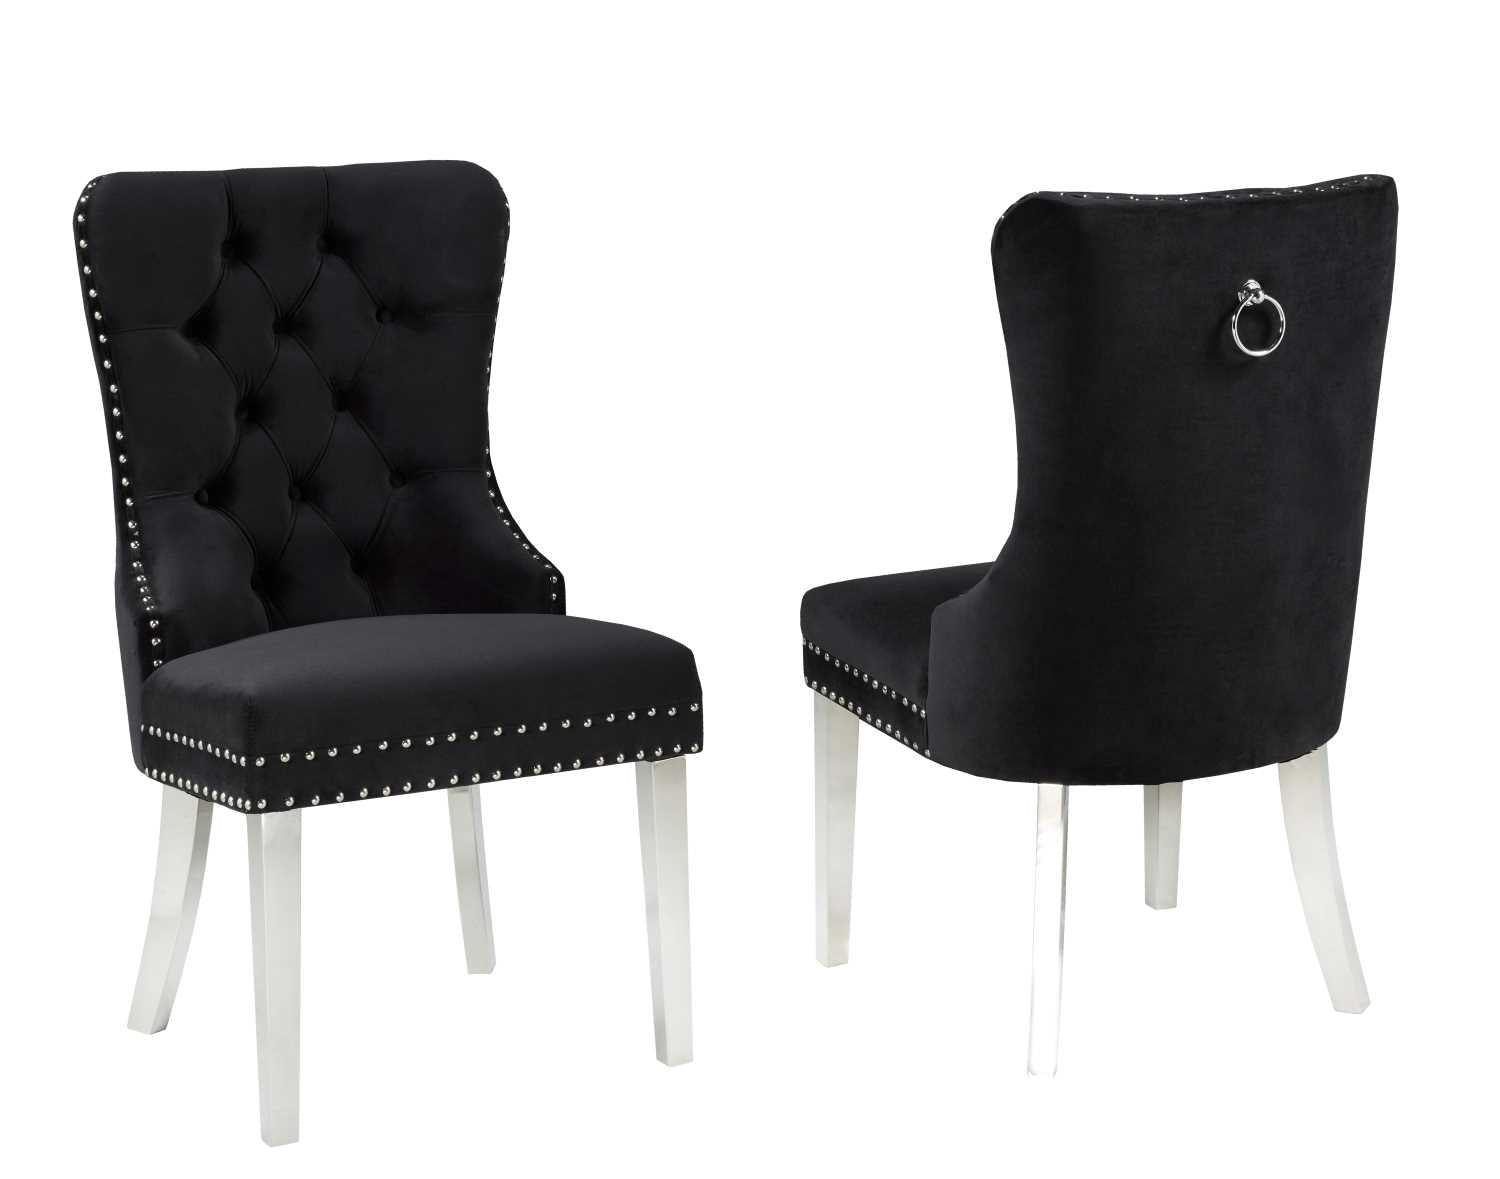 Black Dining Chair W/ Chrome Legs F459-BK (Set of 2)